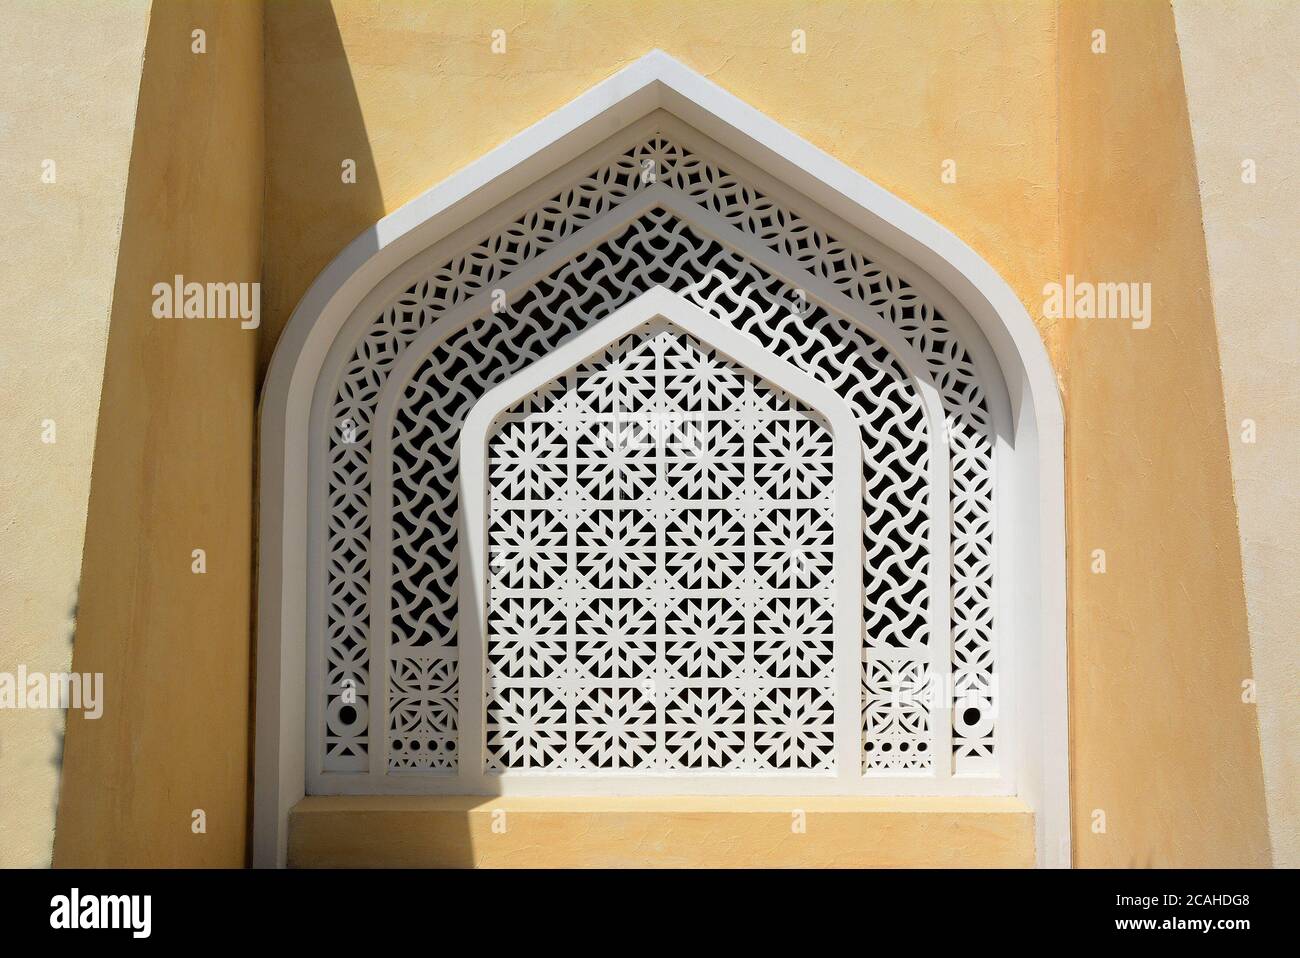 traditional arabic architecture and design Stock Photo